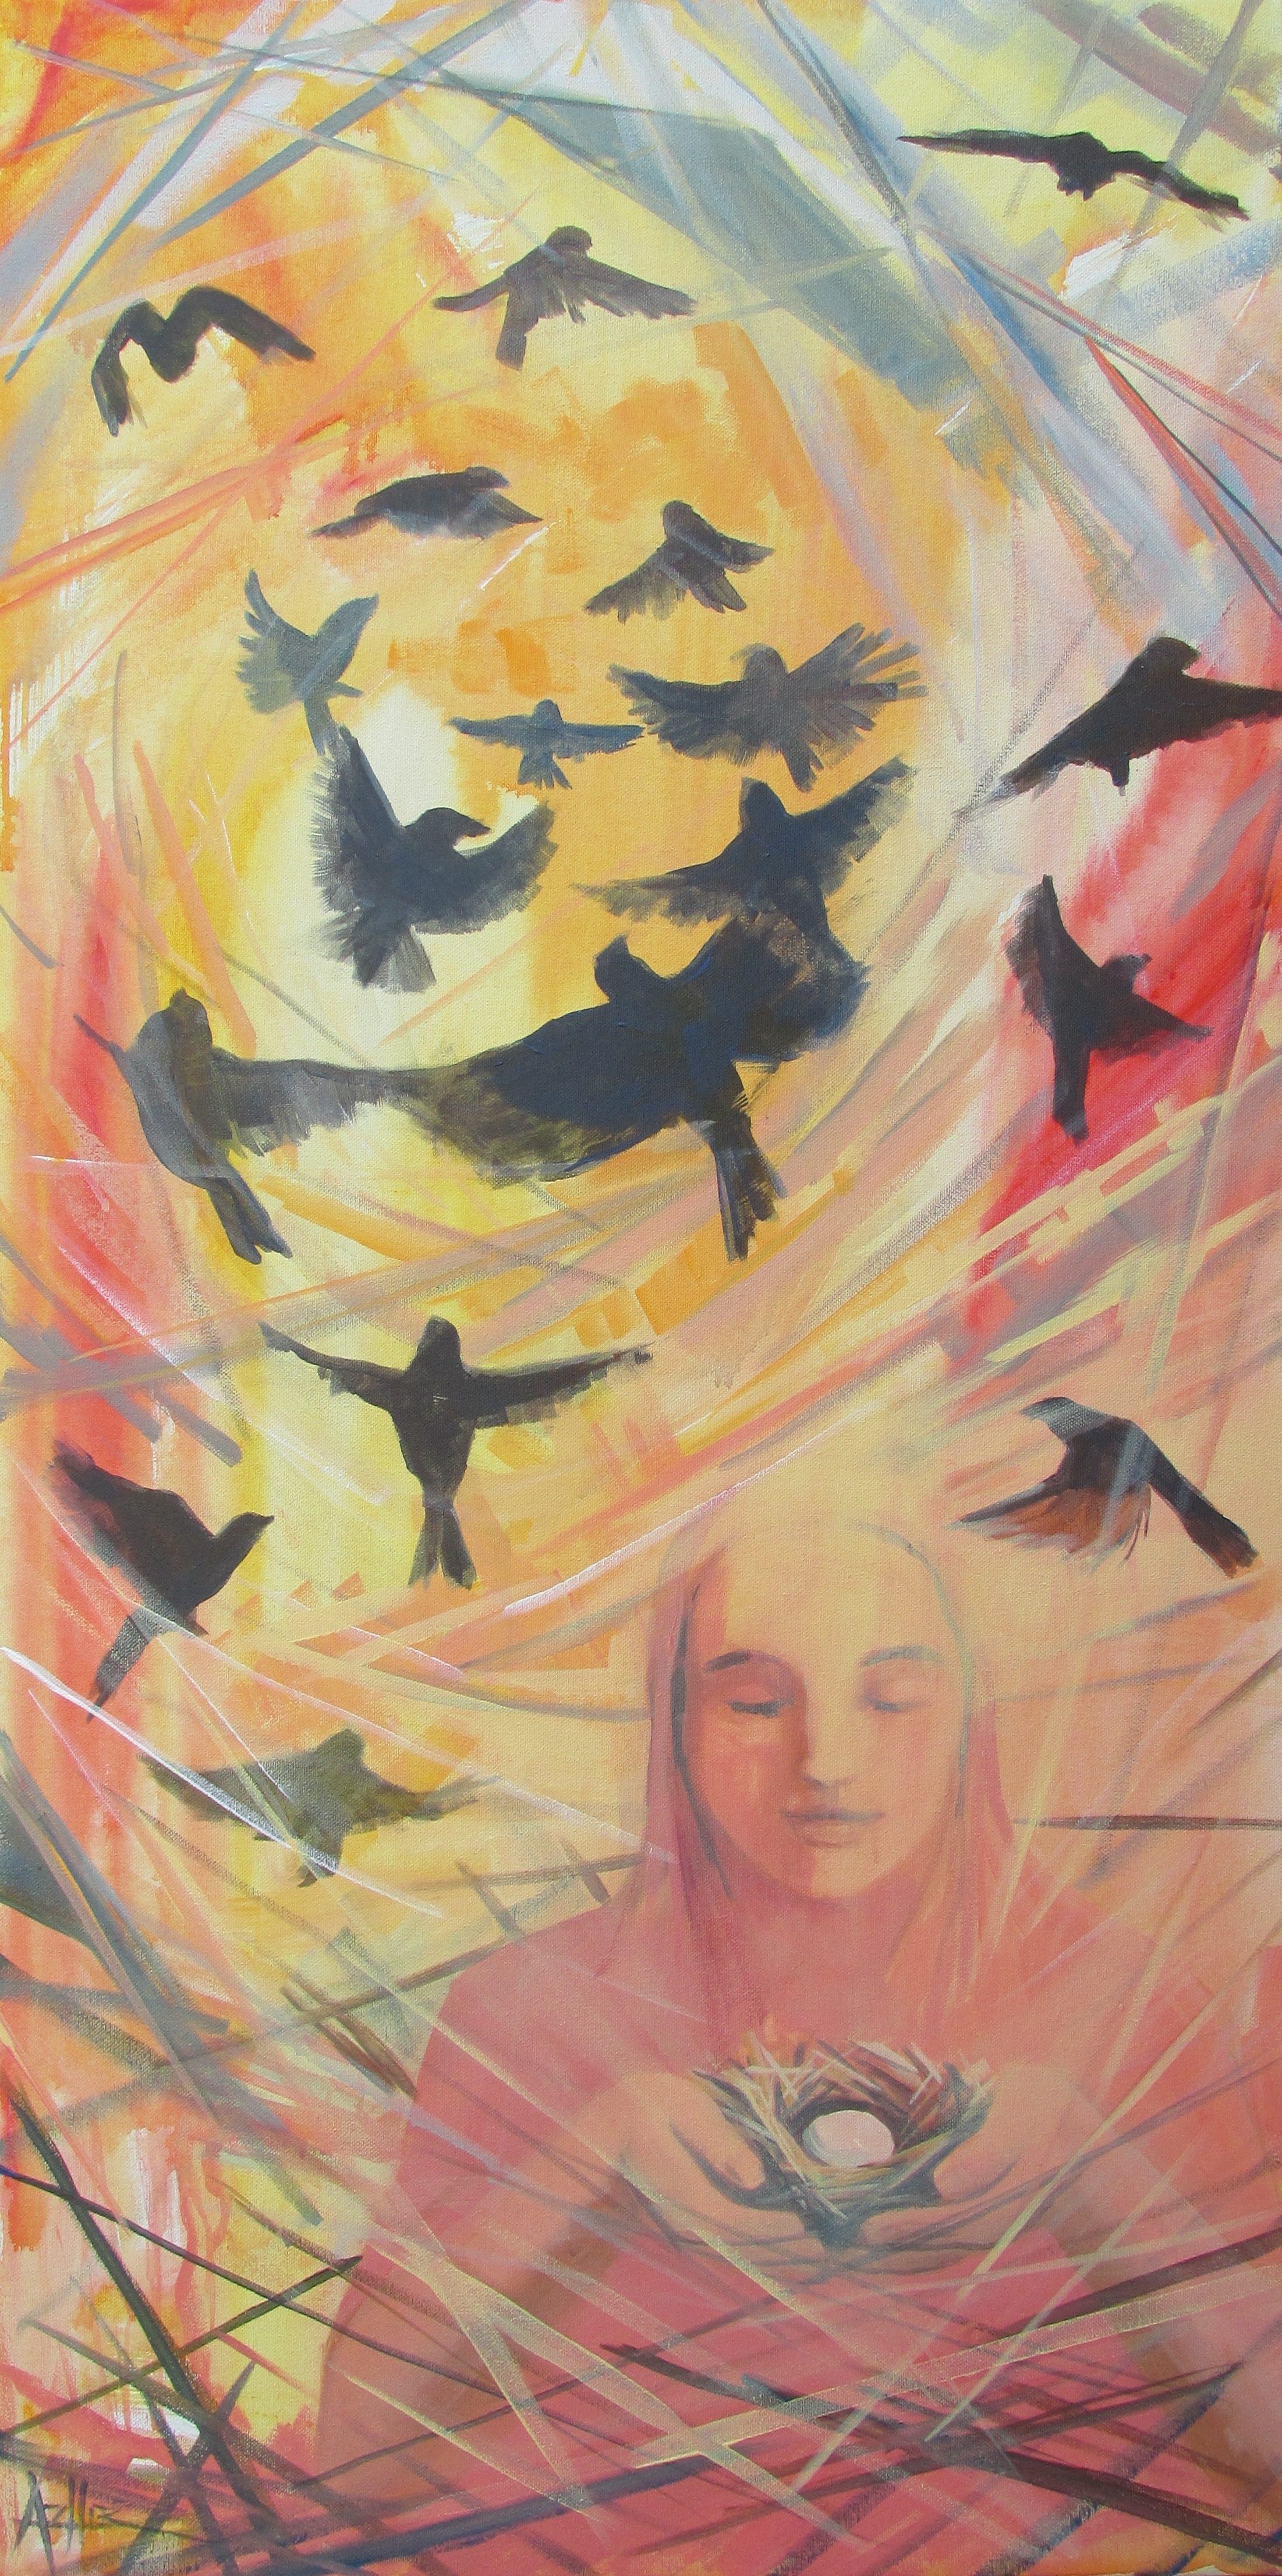 SOLD, The Birds of Syria, Copyright 2015 Hirschten, Acrylic on Canvas 18" x 36"